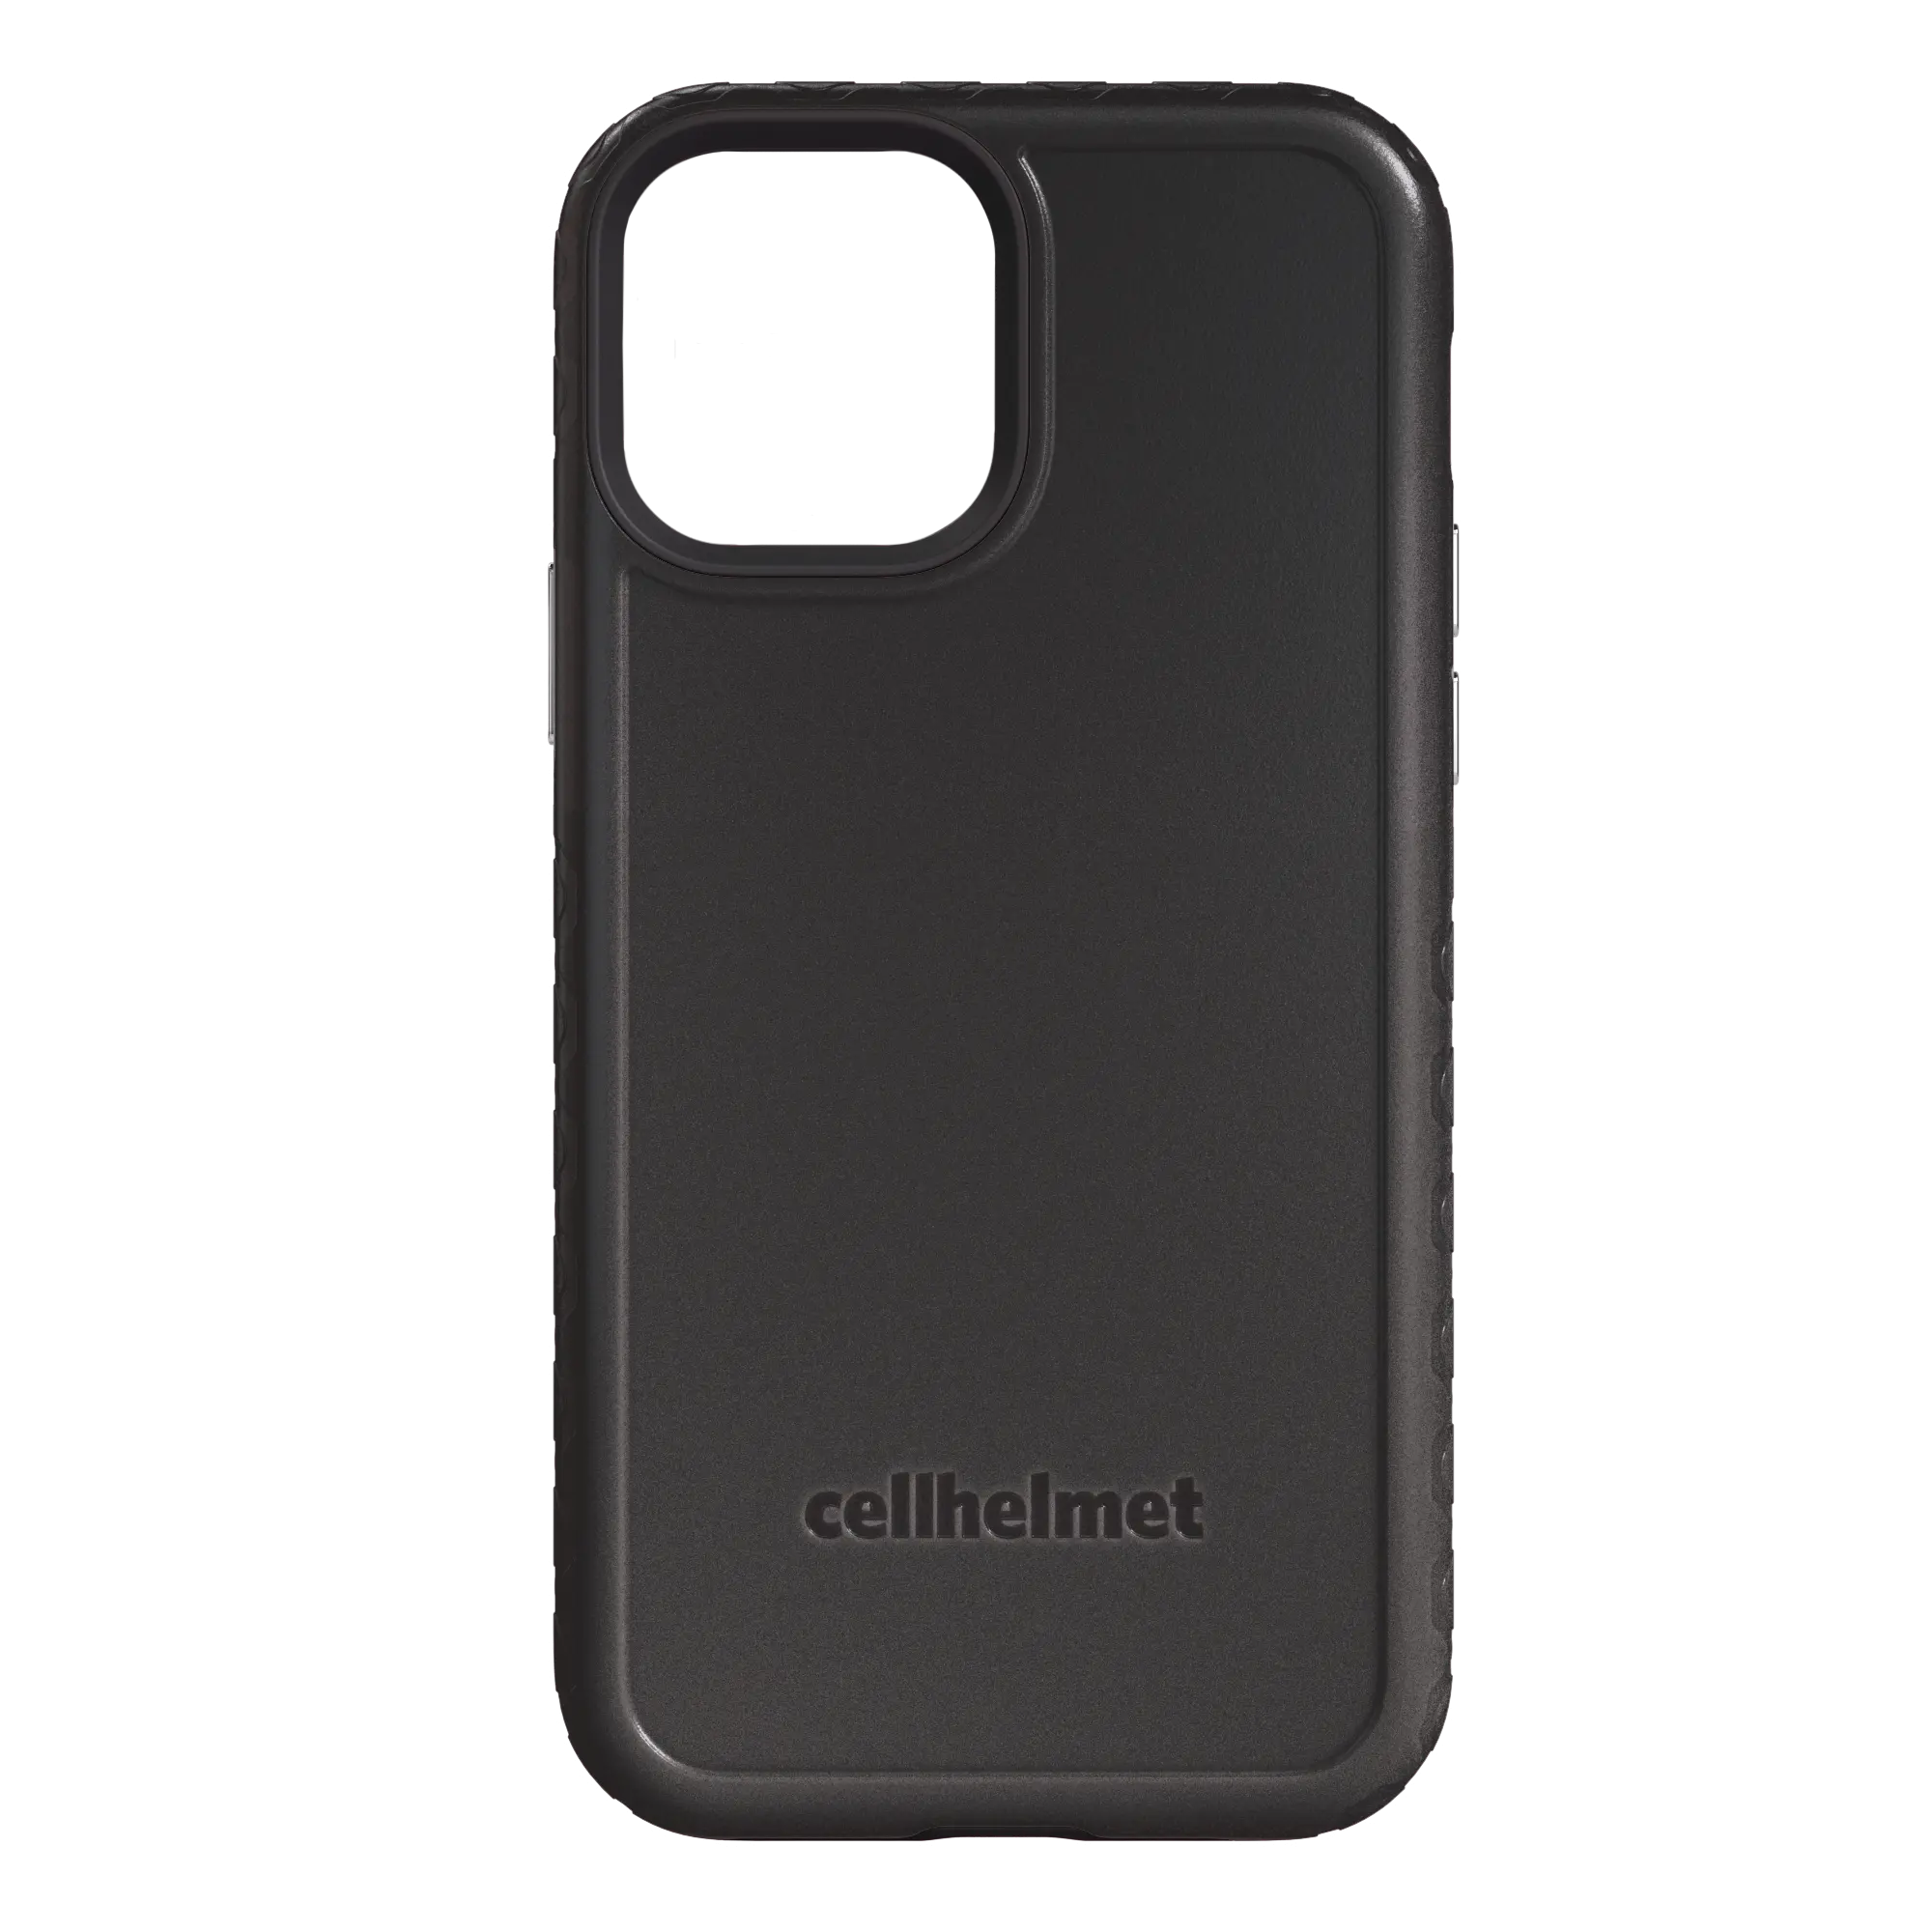 Black cellhelmet Customizable Case for iPhone 12 Pro